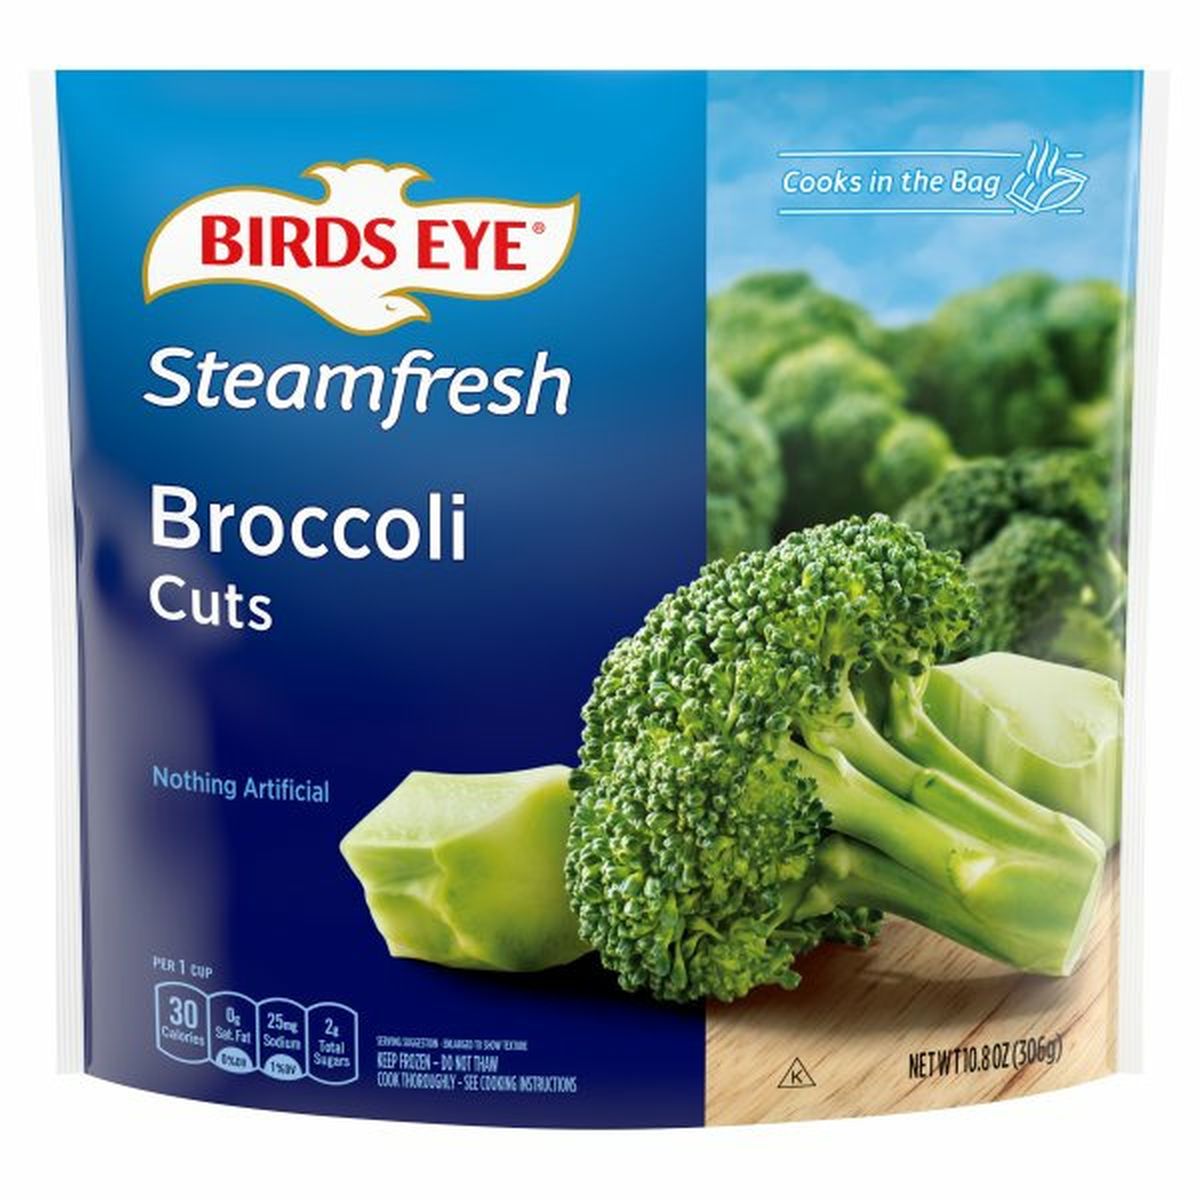 Calories in Birds Eye Steamfresh Broccoli Cuts